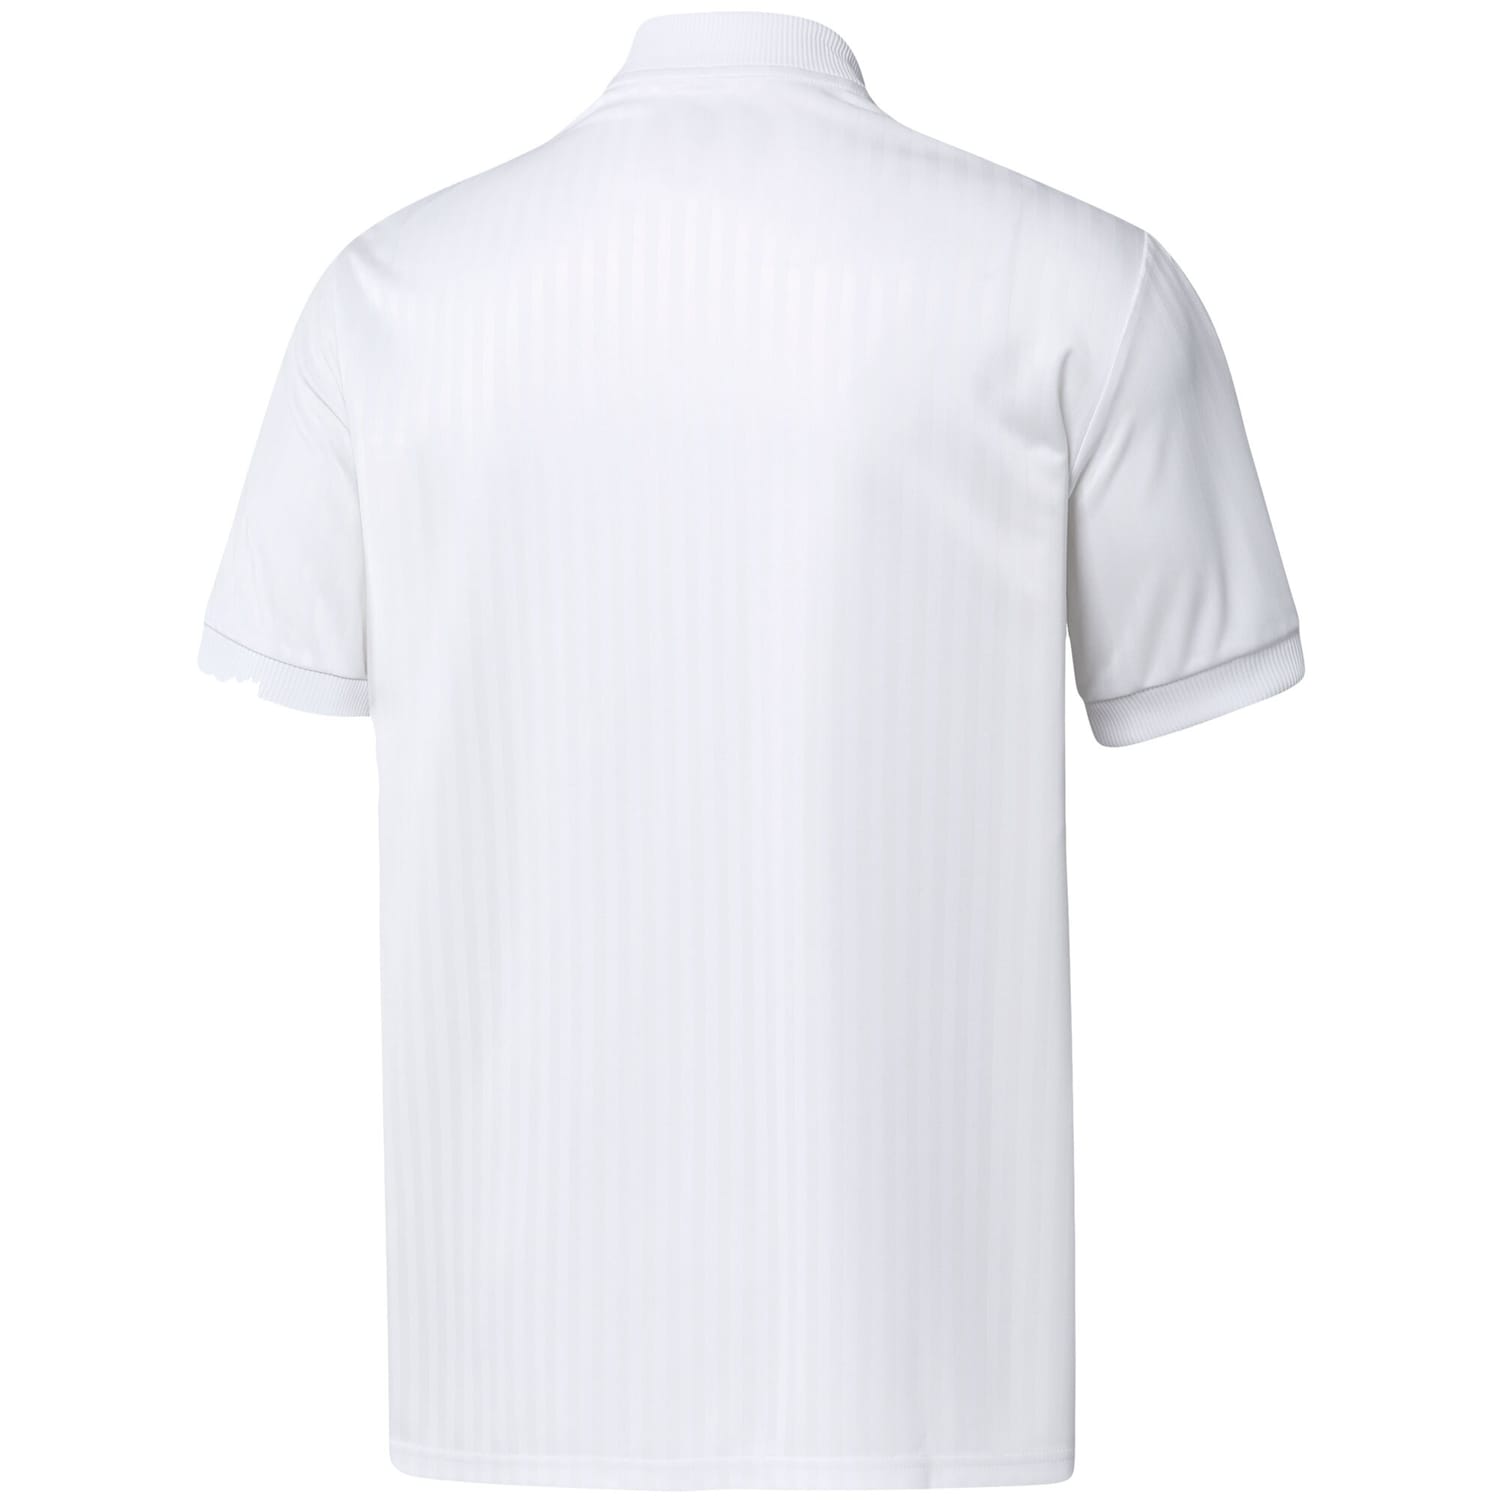 Primera Division Argentina Boca Juniors Jersey Shirt White for Men